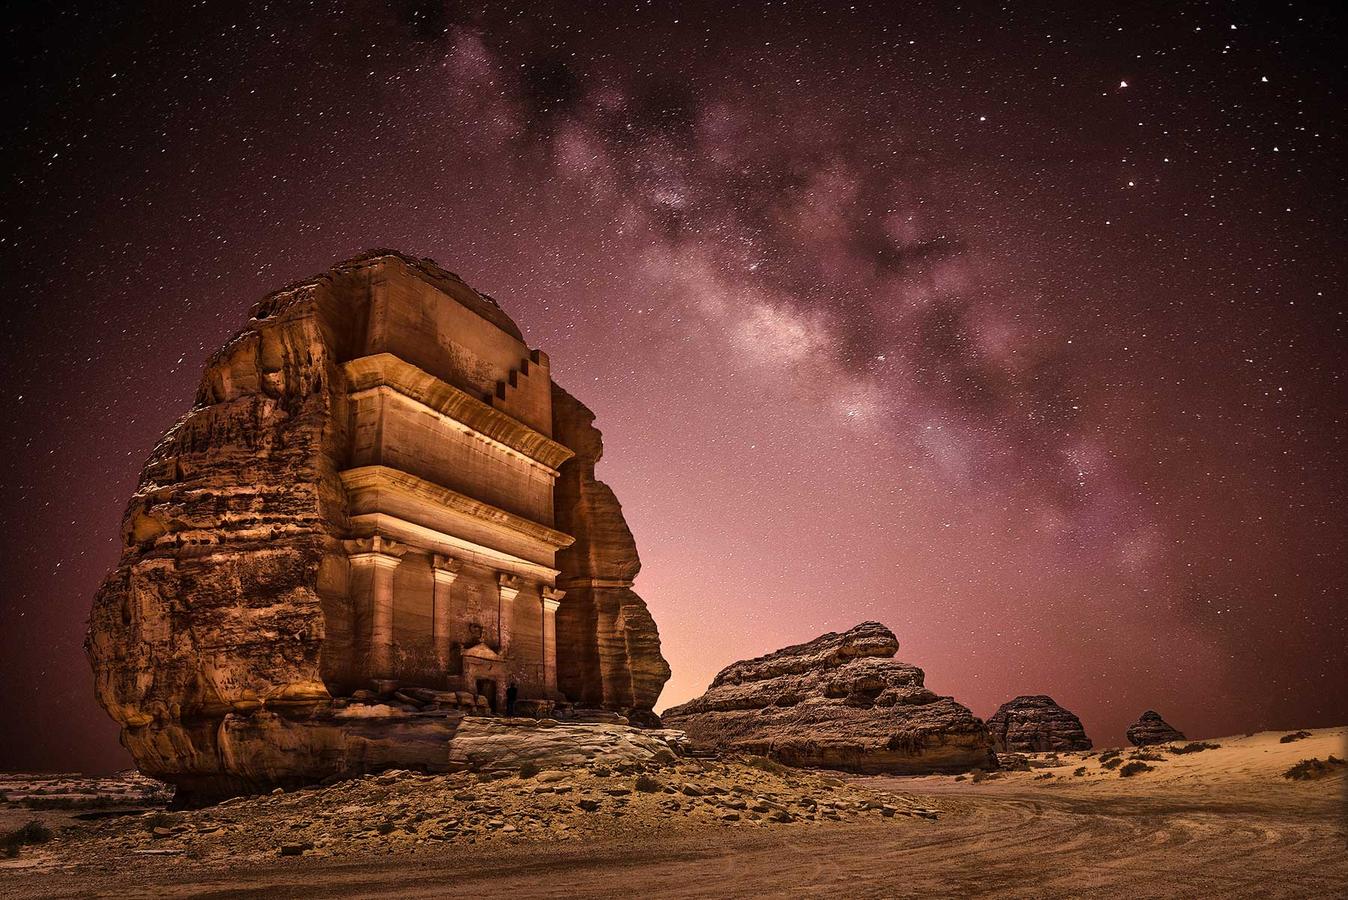 Galaxy milky way at Saudi Arabia (Image: Shutterstock)